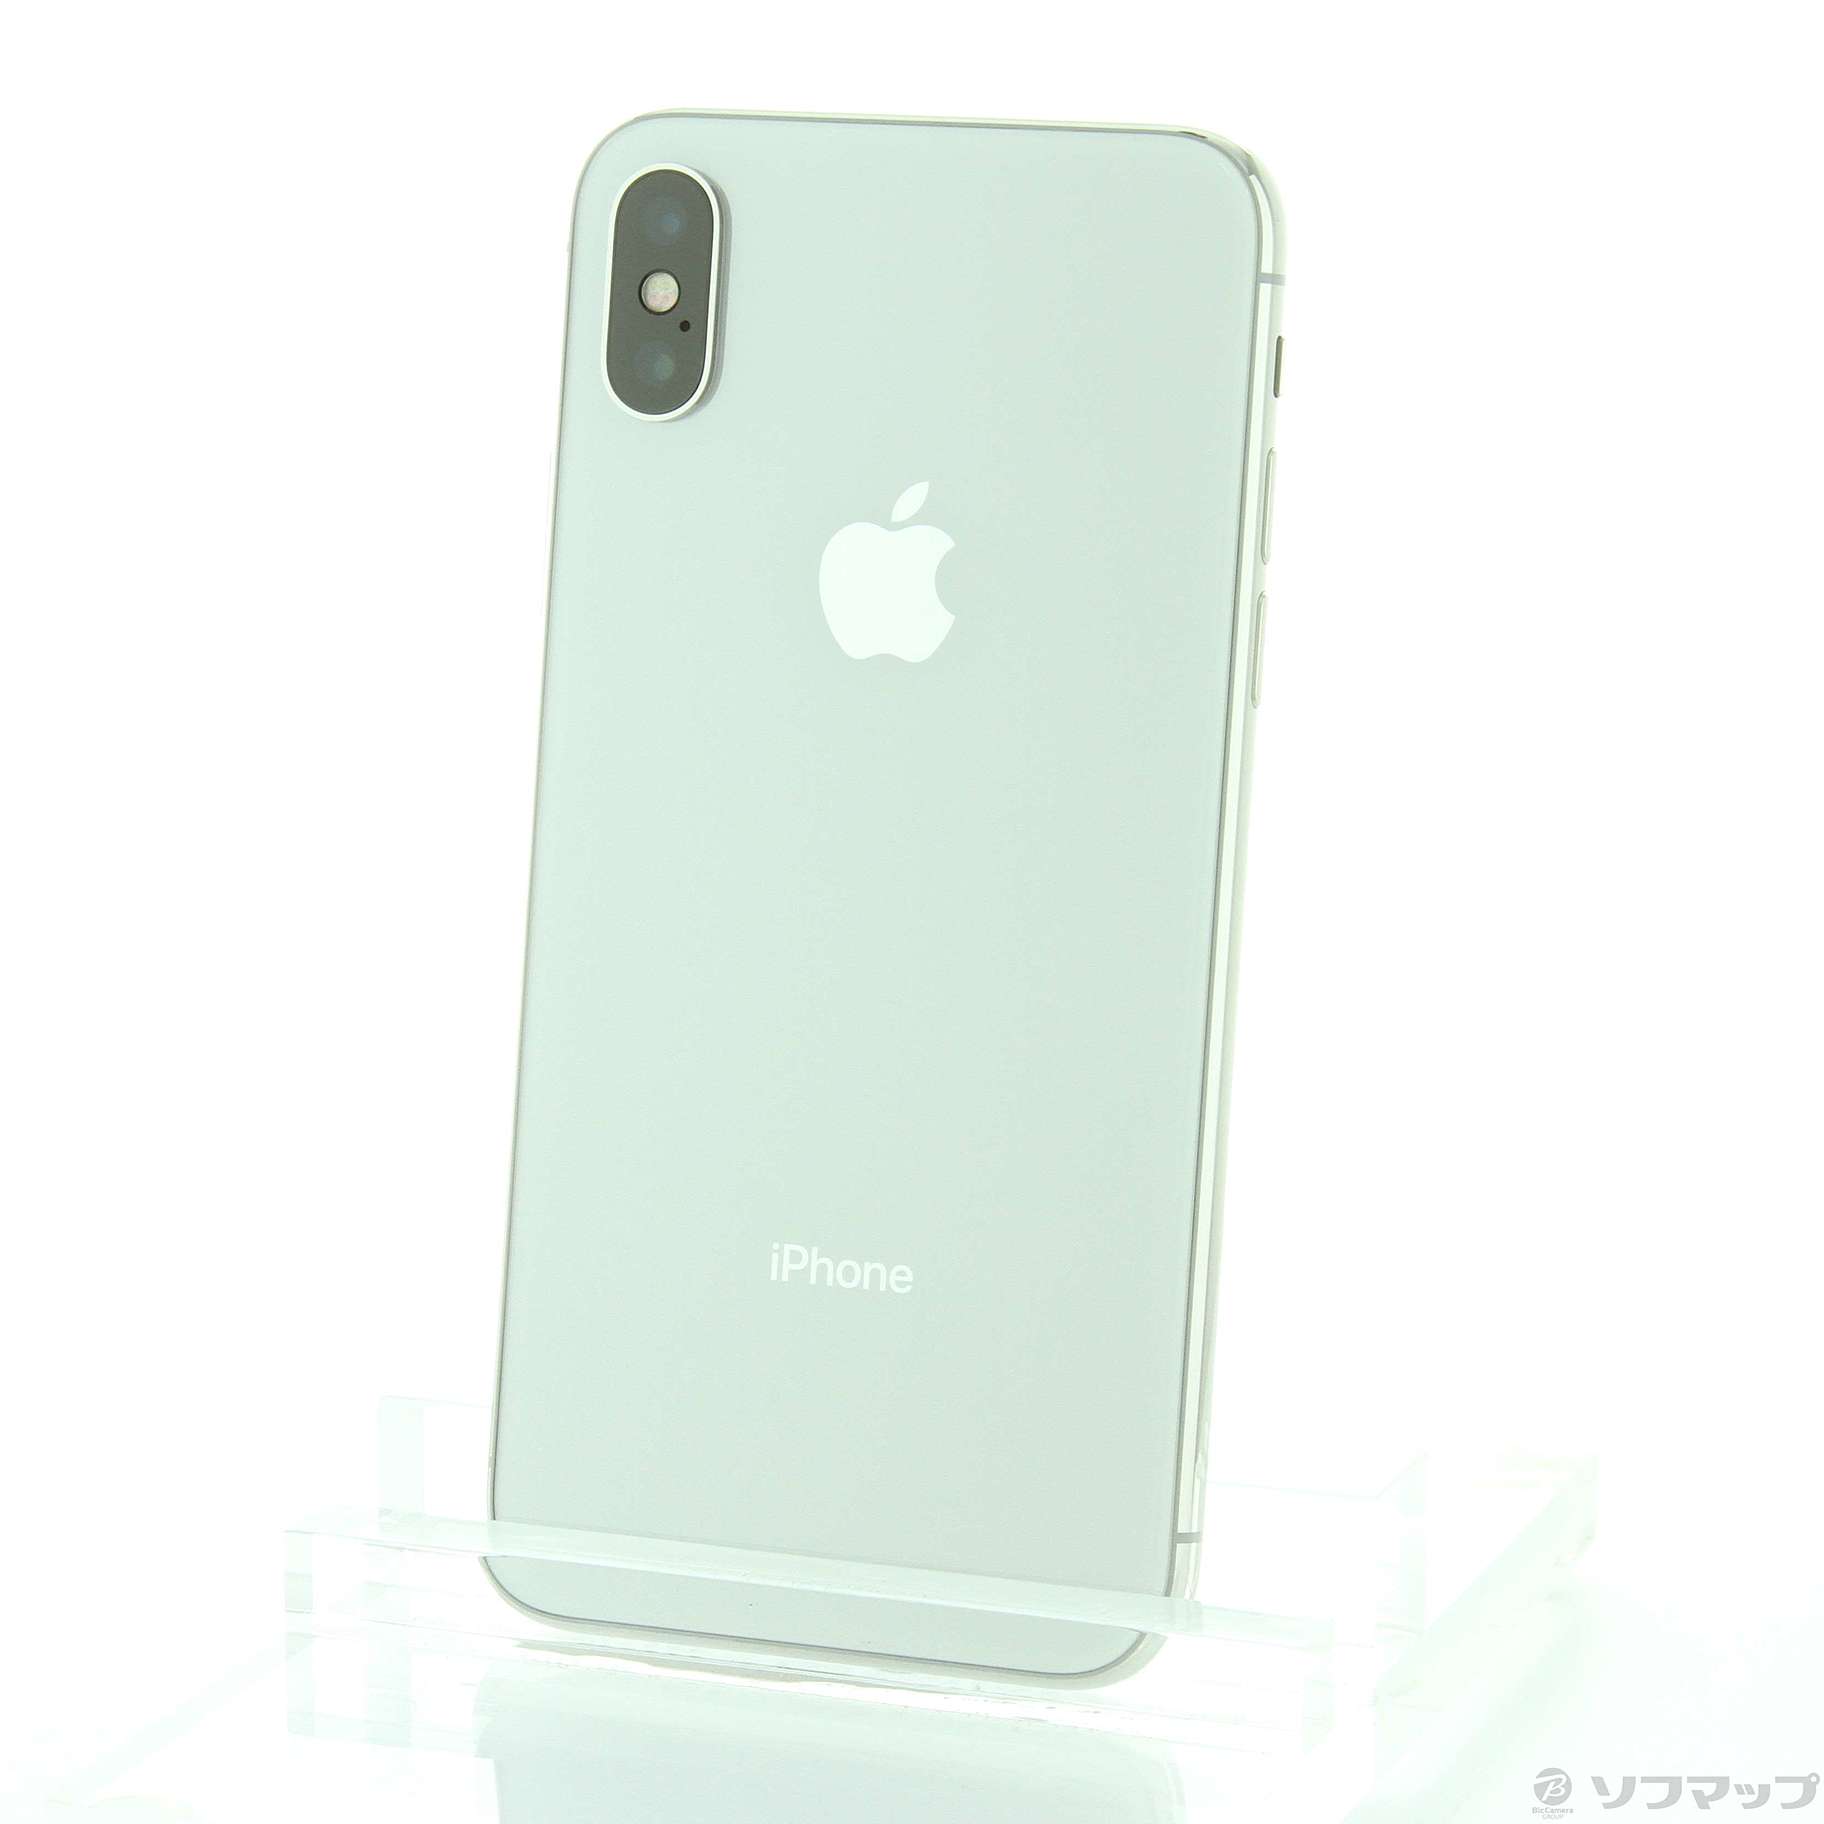 Apple アップル iPhoneX 256GB シルバー MQC22J A S